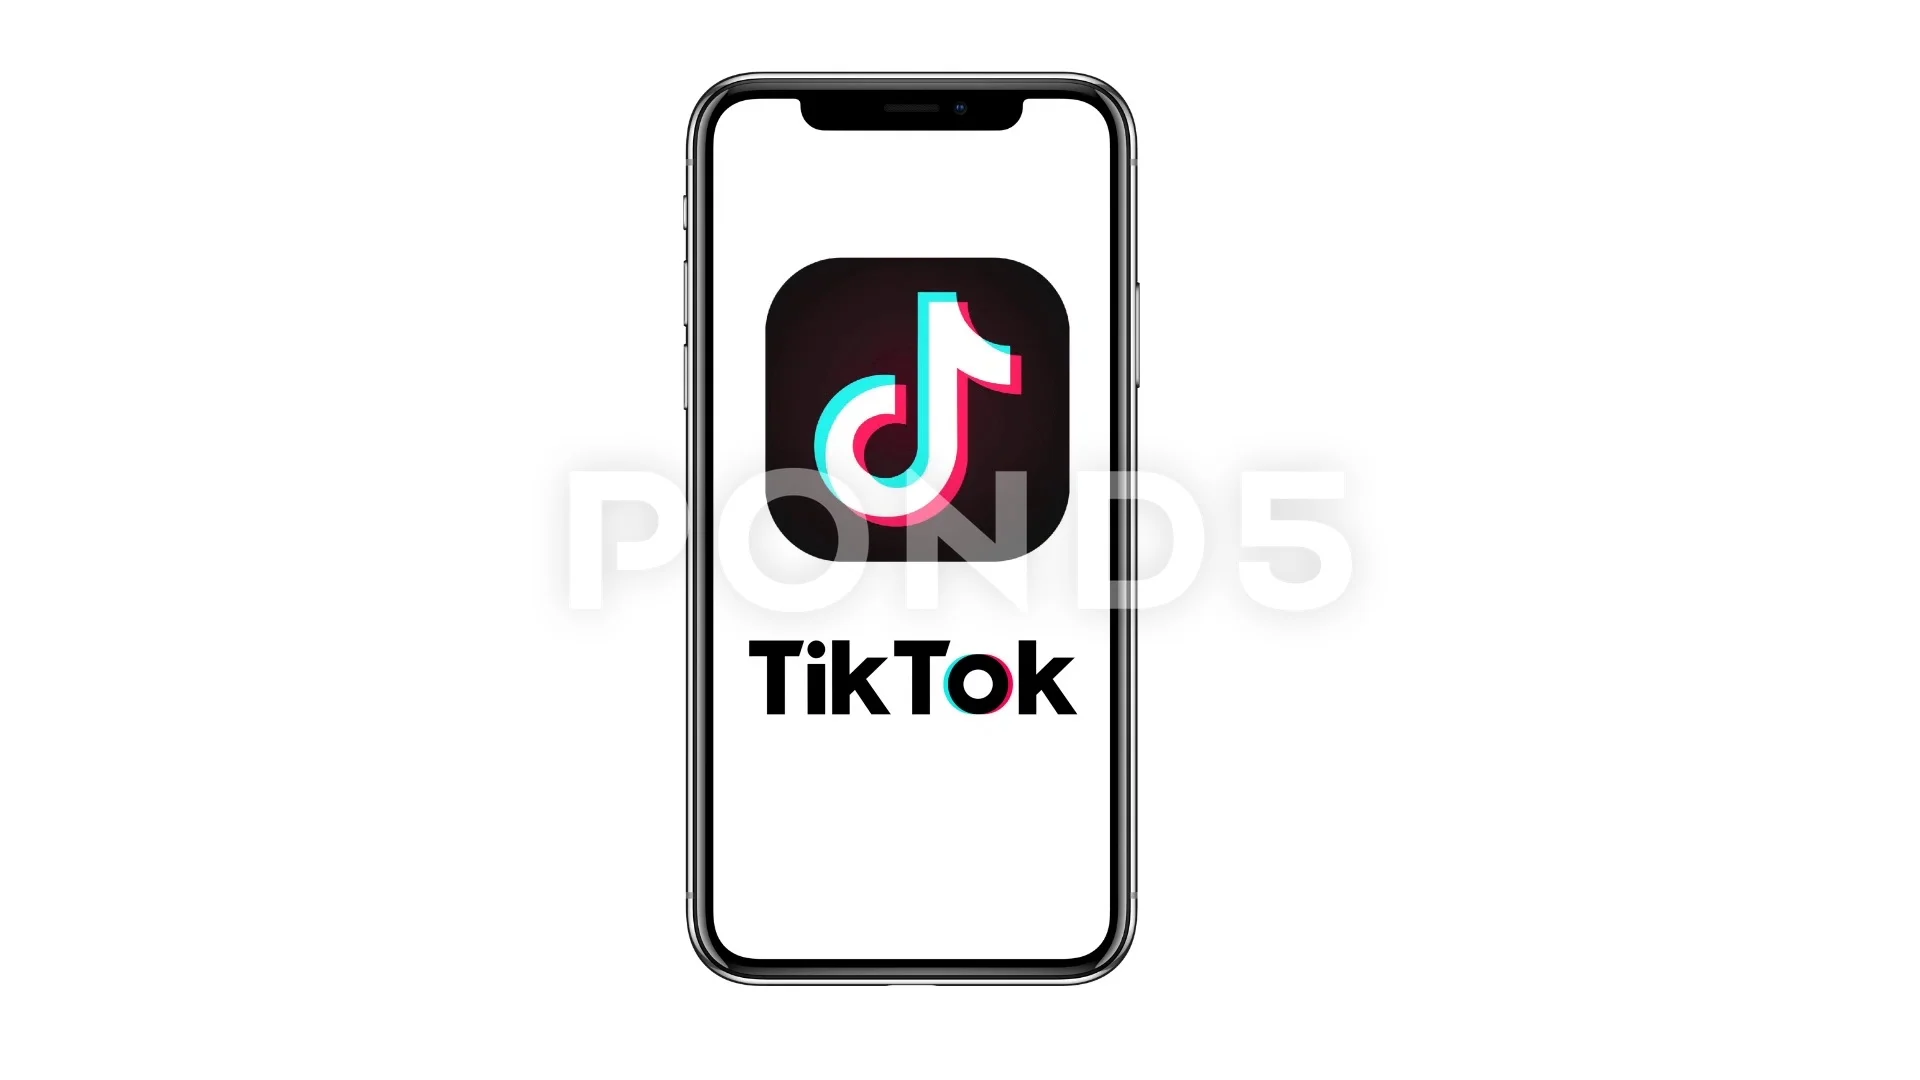 Tik Tok App Logo Animation on Smartphone | Stock Video | Pond5